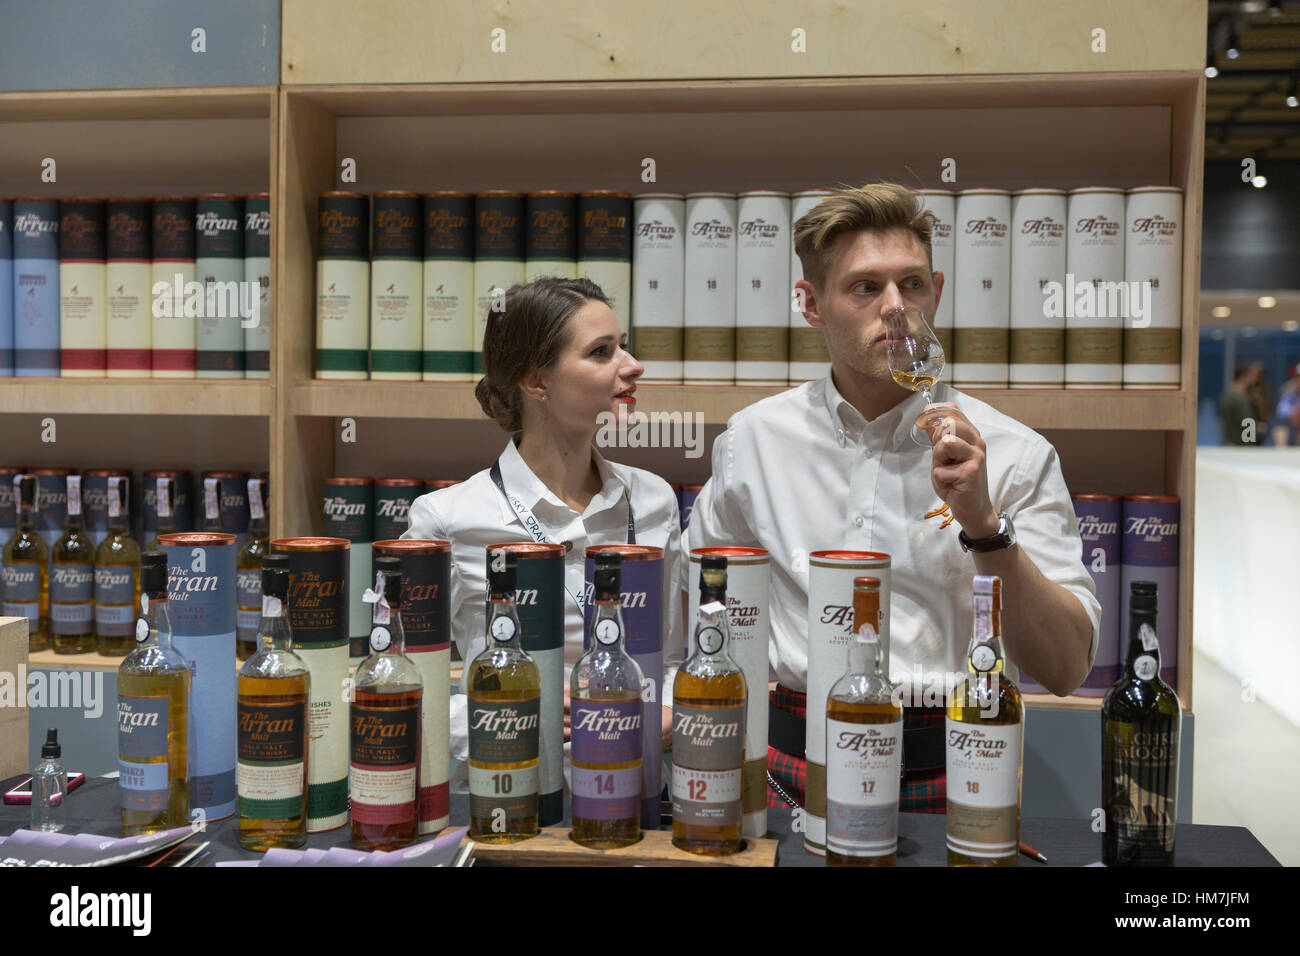 KIEV, UCRAINA - 21 novembre 2015: Andy Bell, responsabile vendite regionale, presenta la Arran single malt Scotch Whisky Distillery stand ucraino 1W Foto Stock